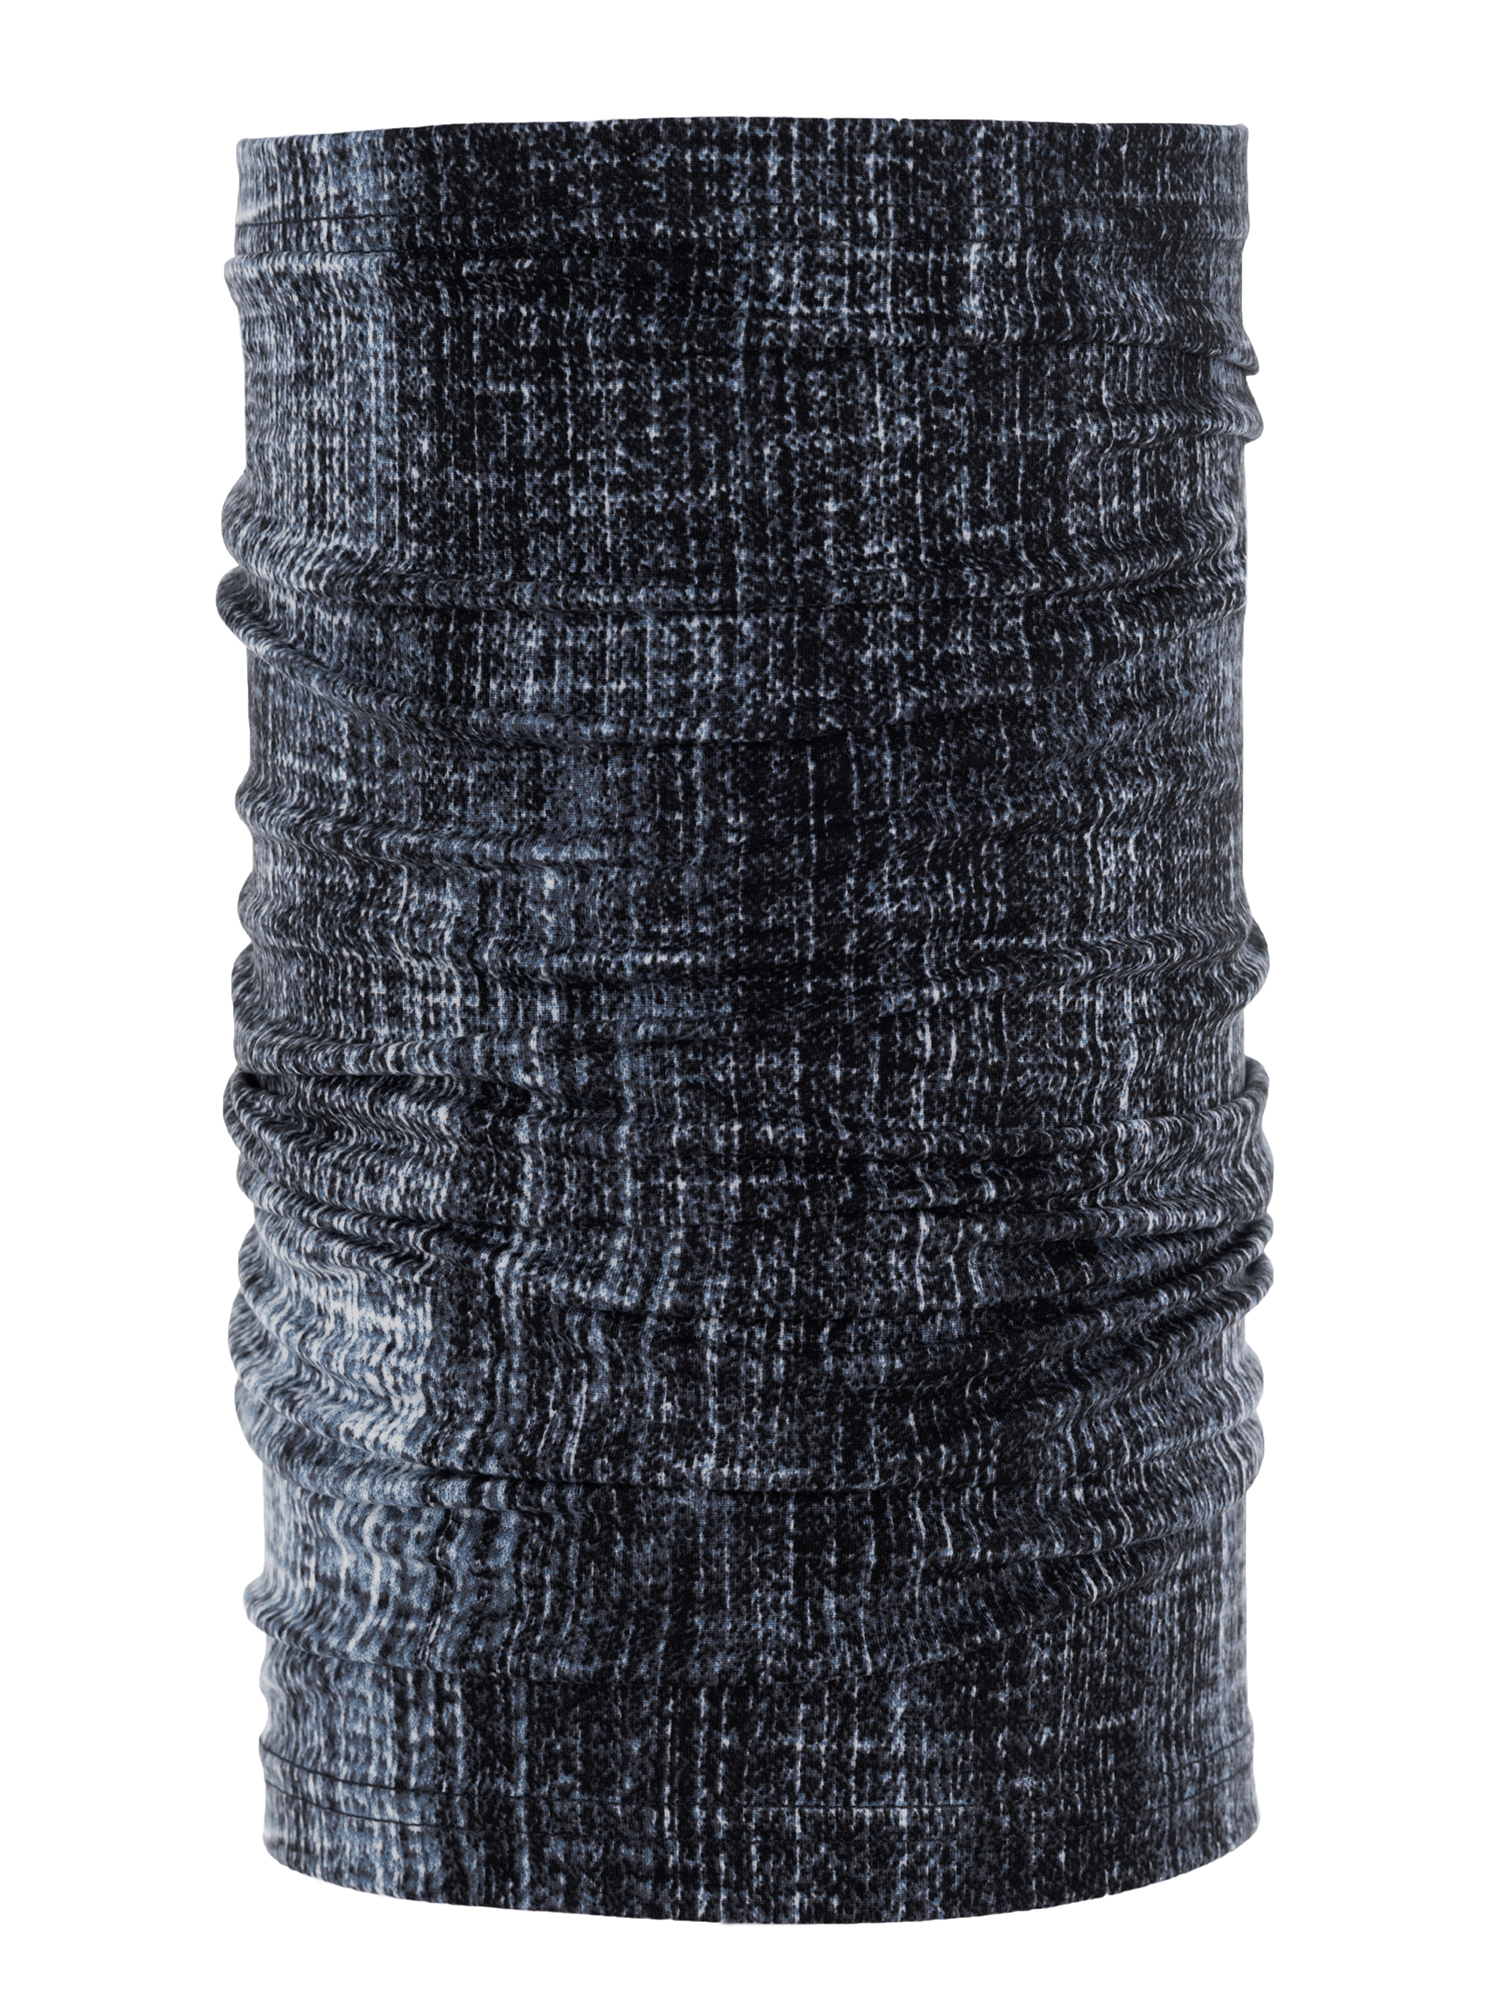 Wrangler Men's Workwear Neck Gaiter Multi-colored 3-Pack - image 3 of 6